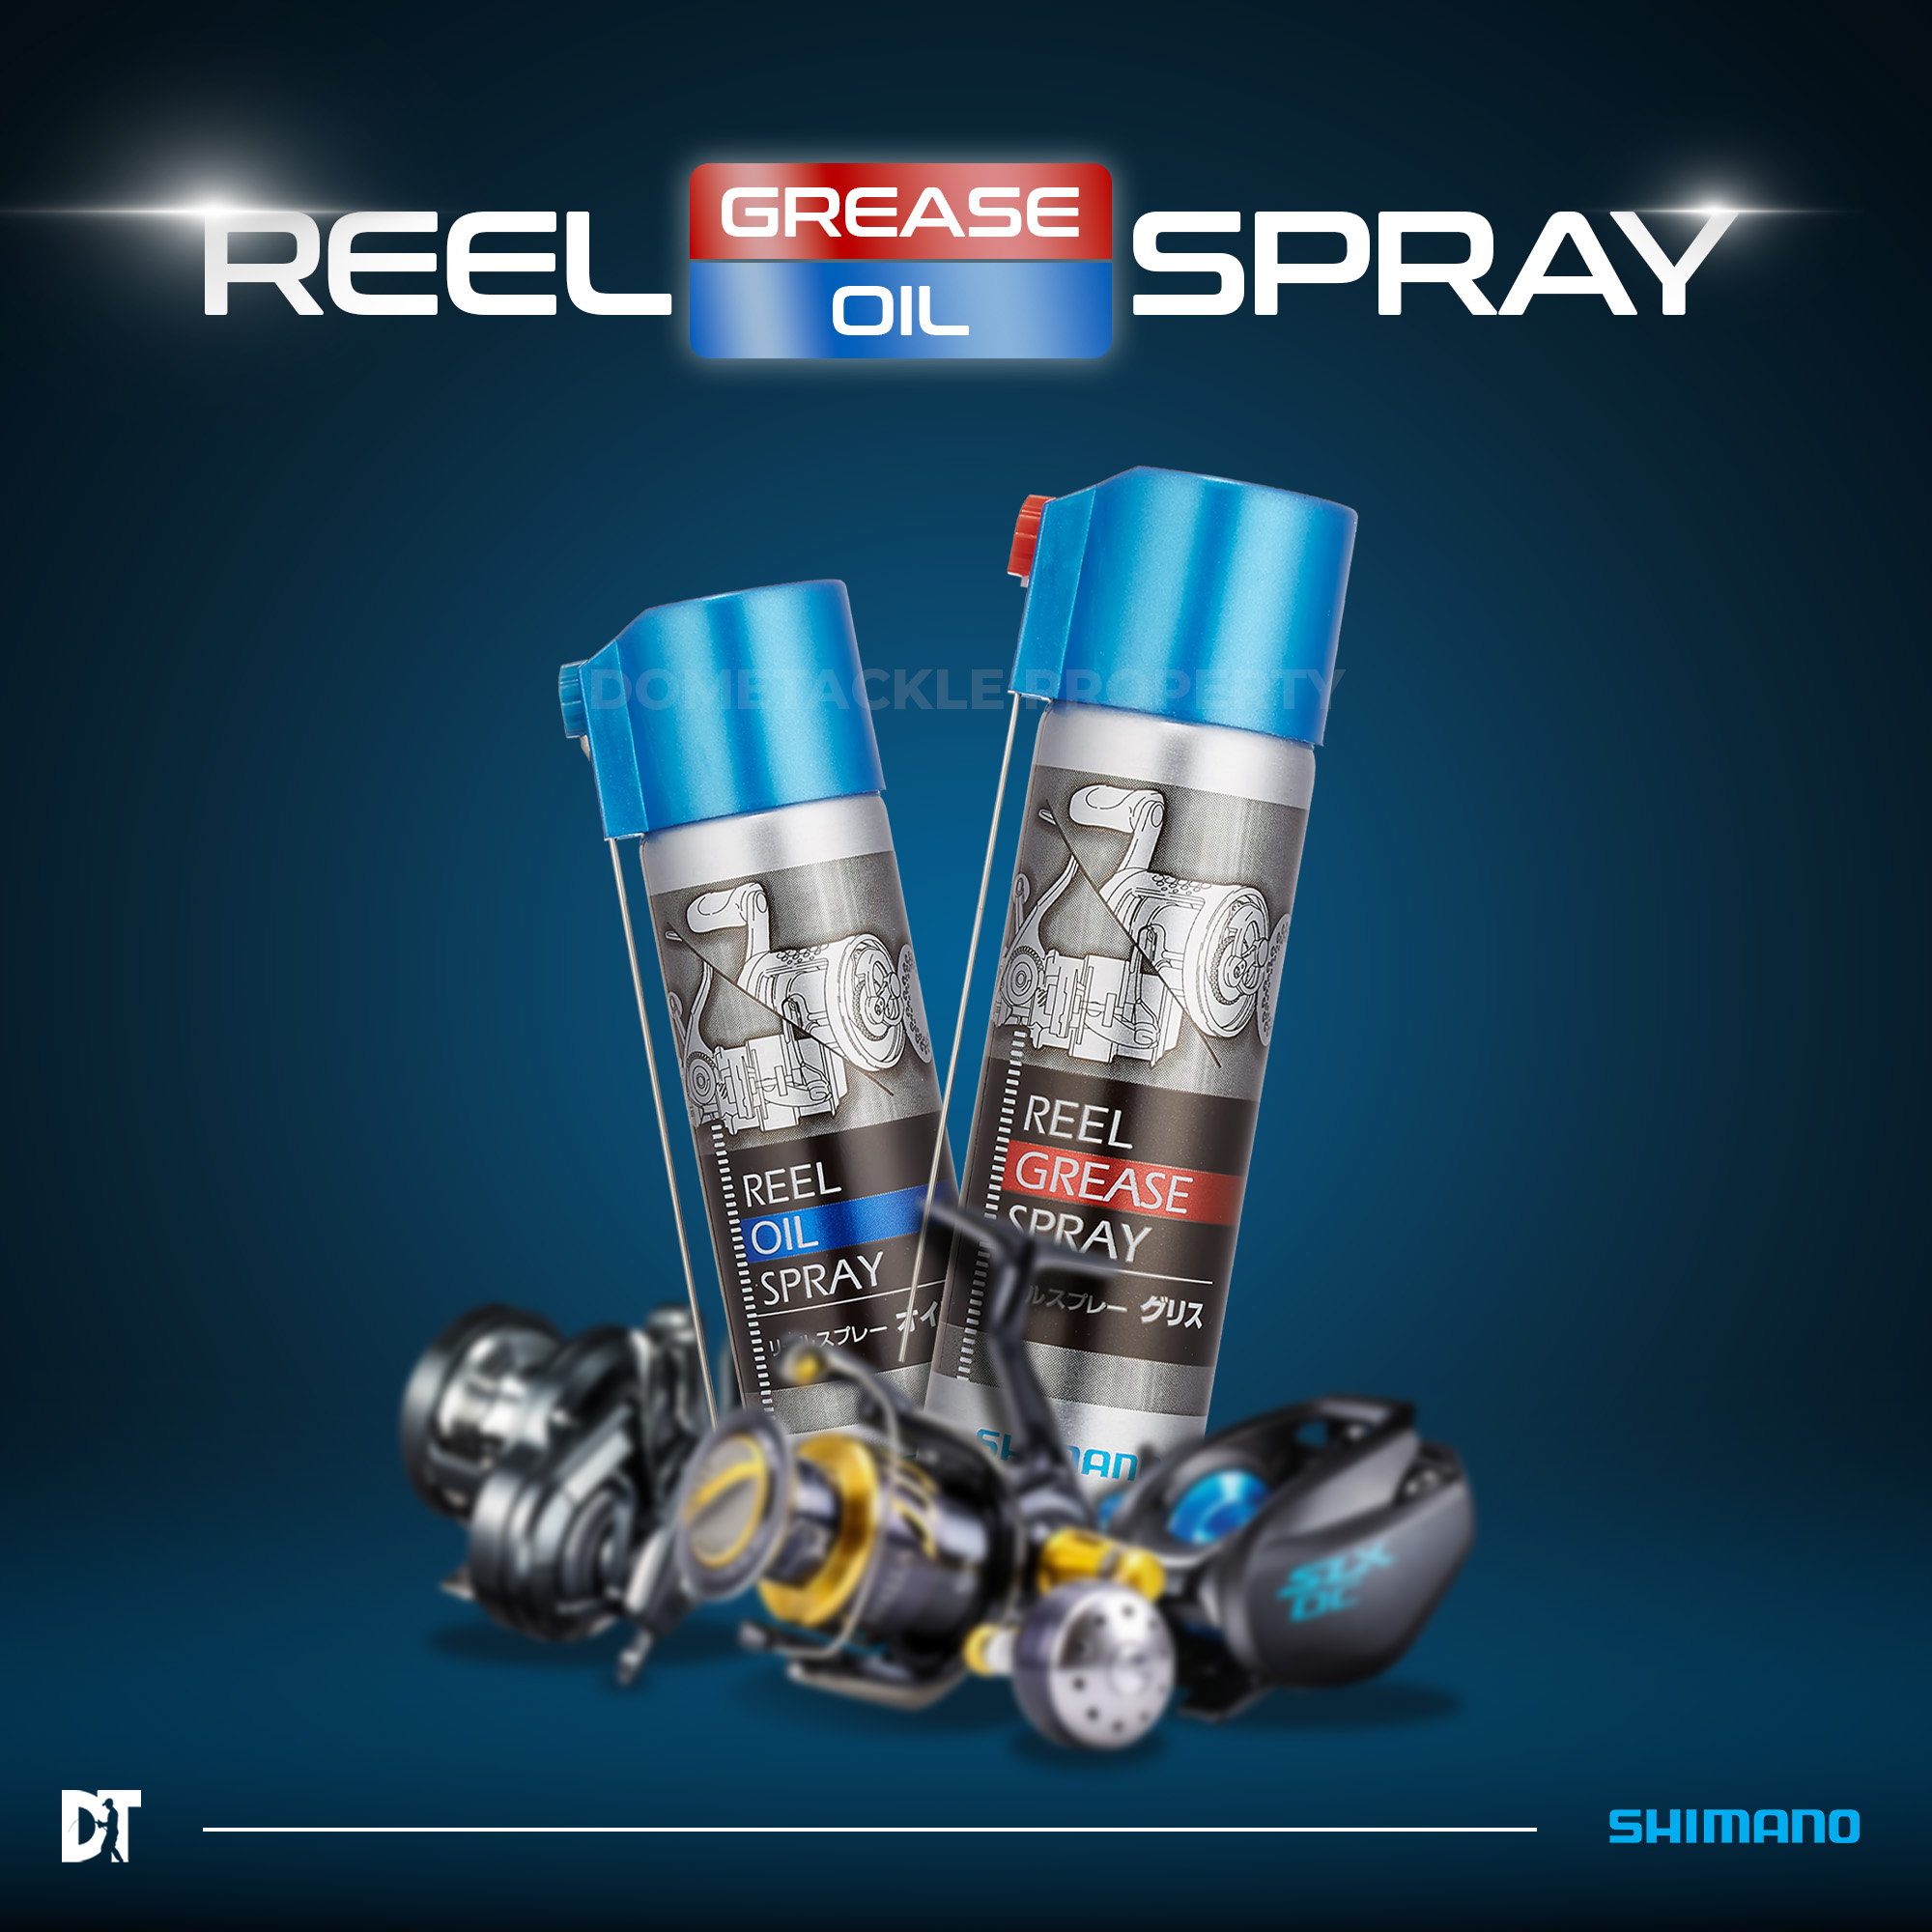 SHIMANO ) Reel Maintenance Spray / Set of oil and grease / Fishing